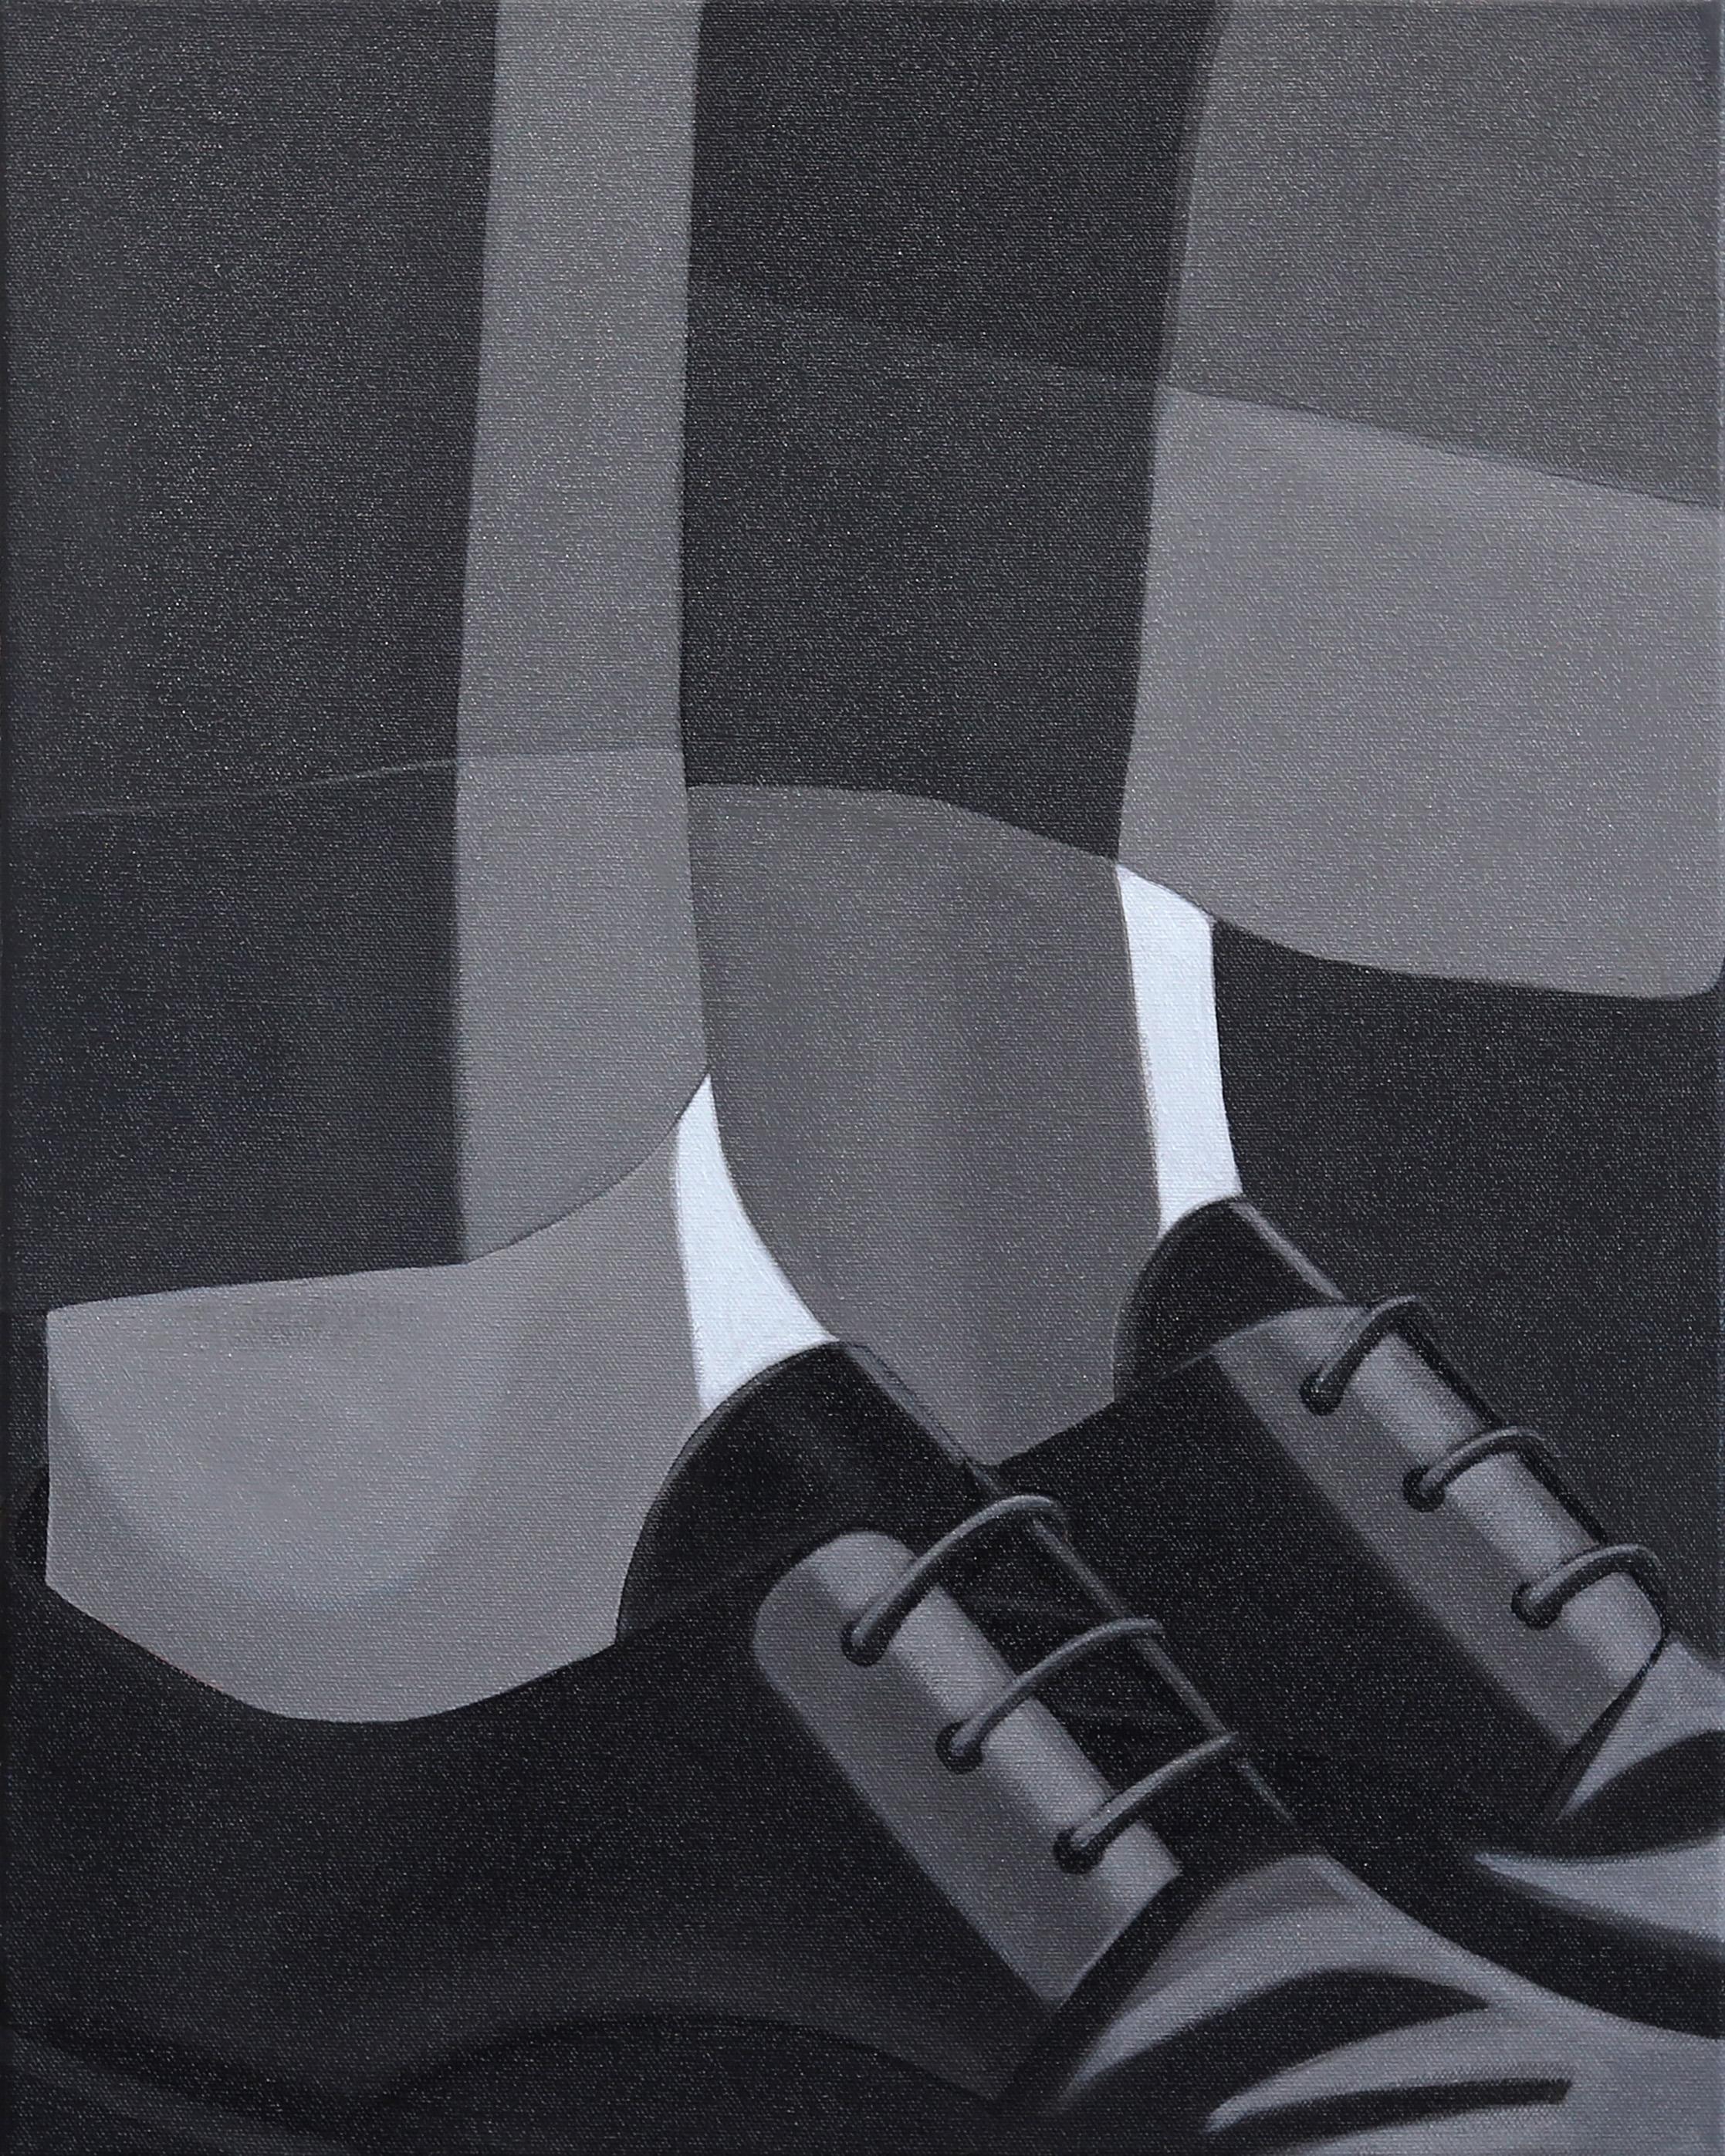 The White Socks - Pop Art Minimalist Monochrome Original Artwork on Canvas